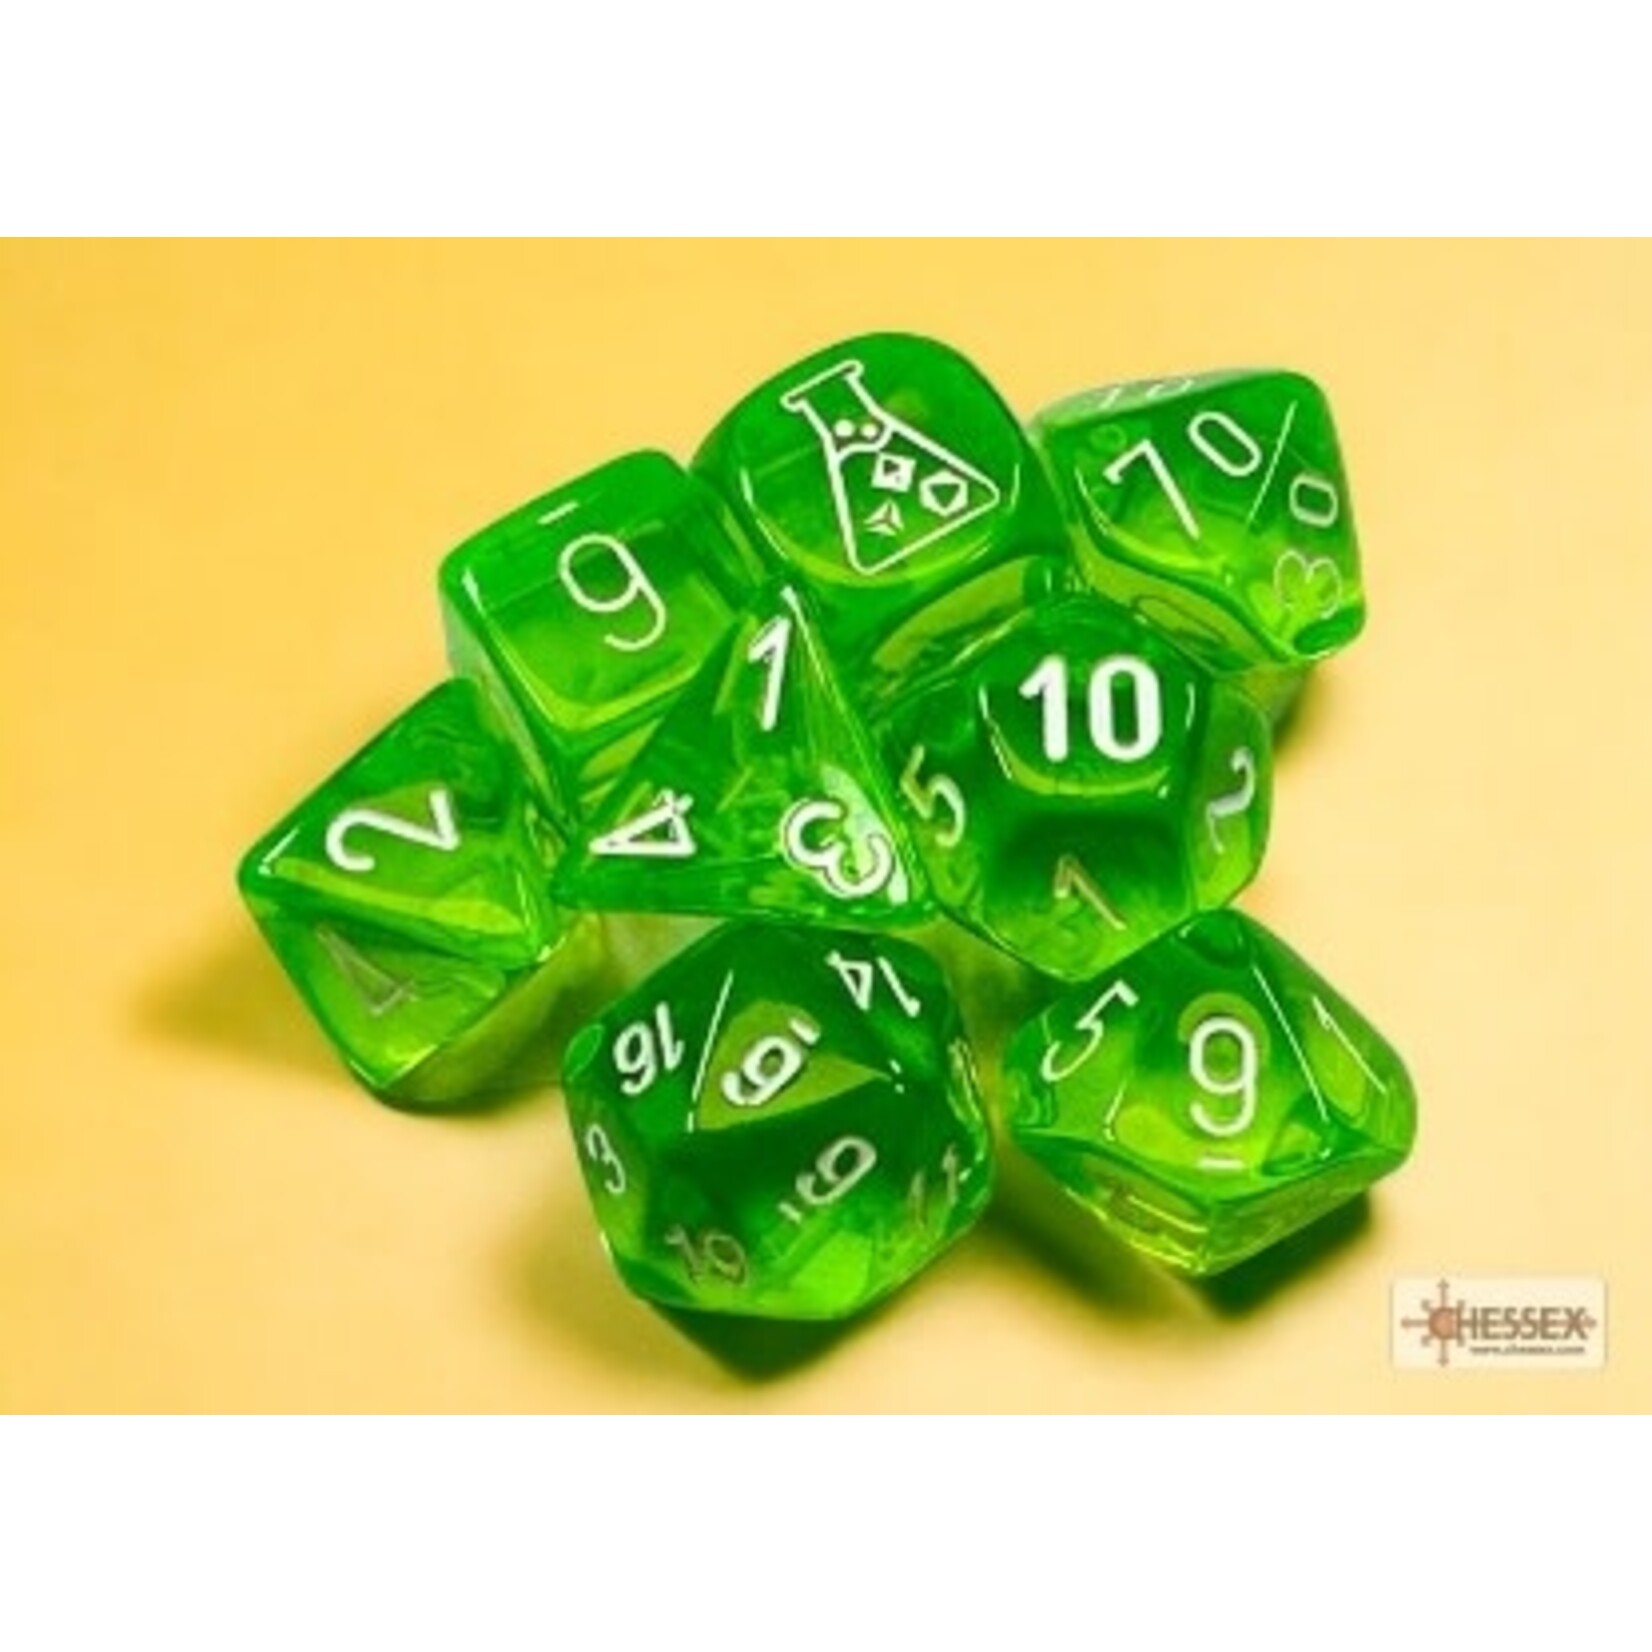 Chessex Translucent Rad Green/white Polyhedral 7-Dice Set (with bonus die)